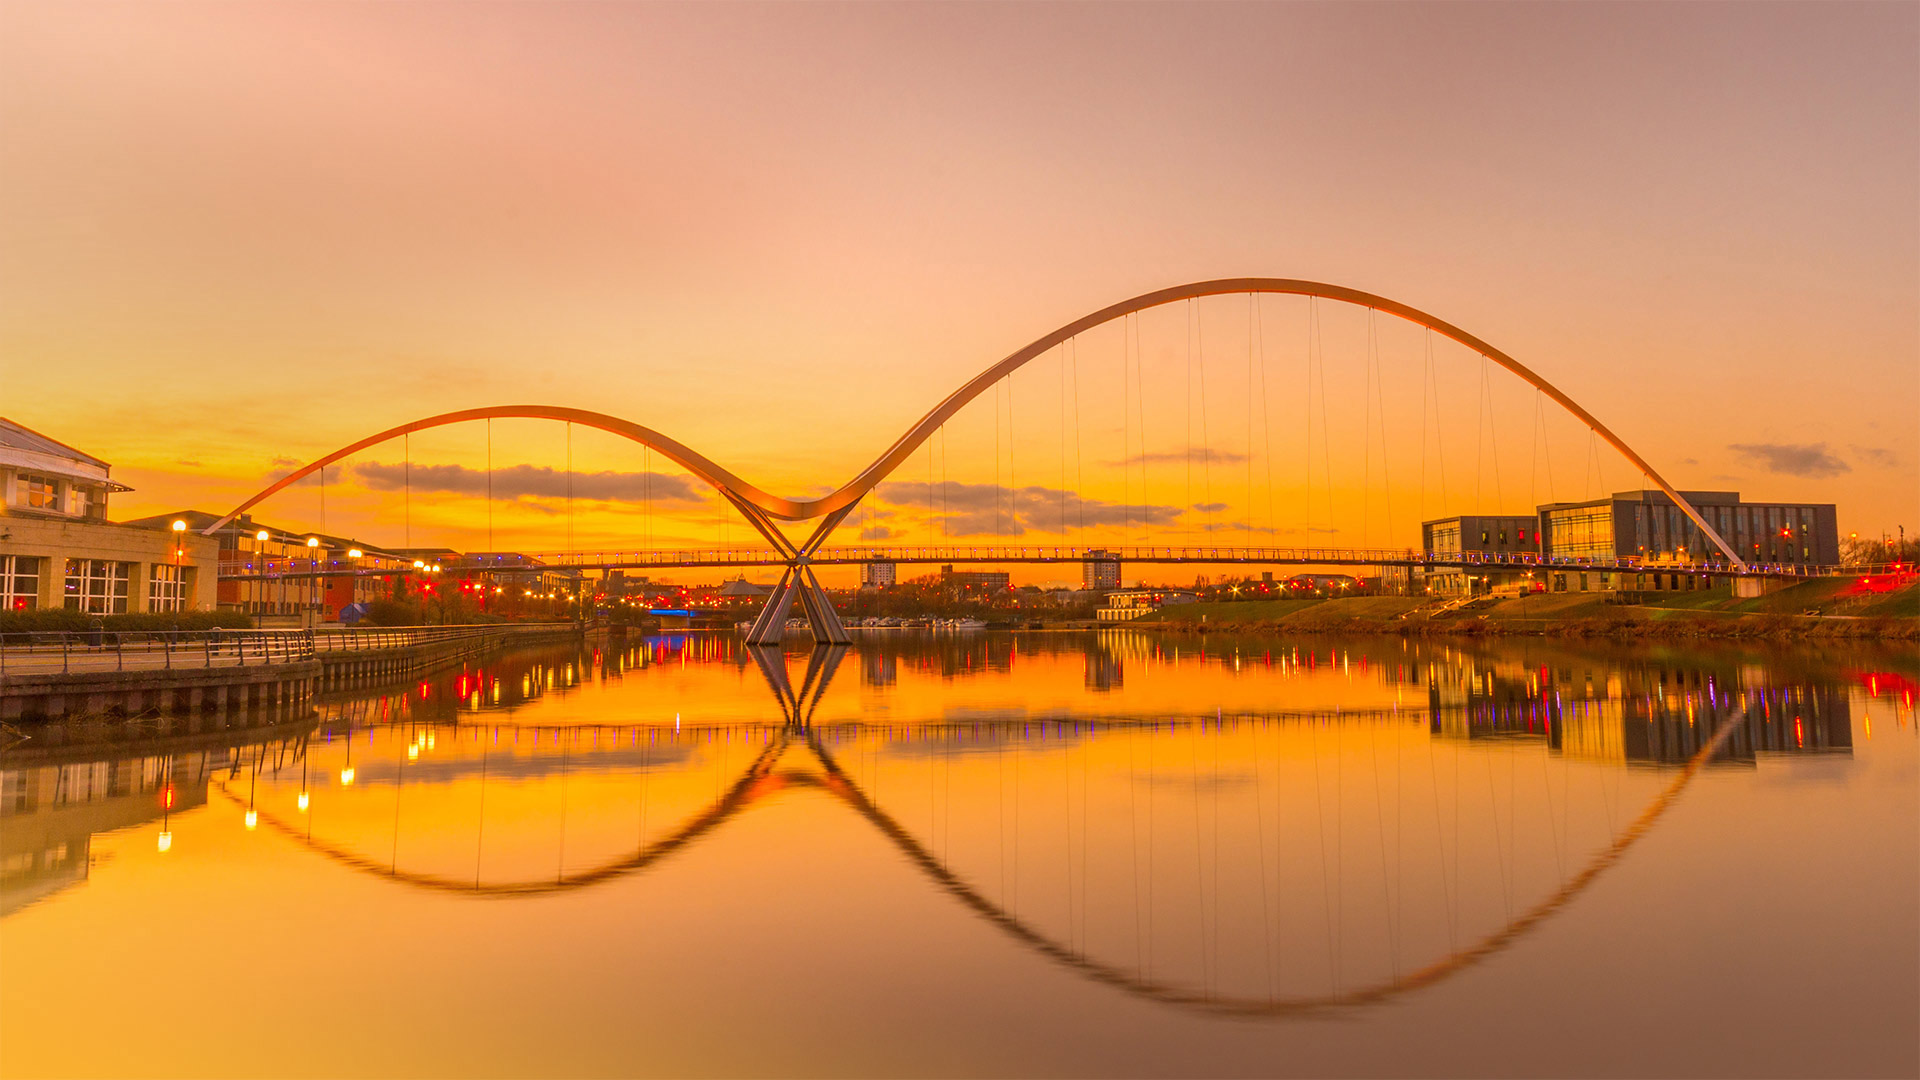 Infinity Bridge in Stockton-on-Tees, England - Robert Smith/Alamy)